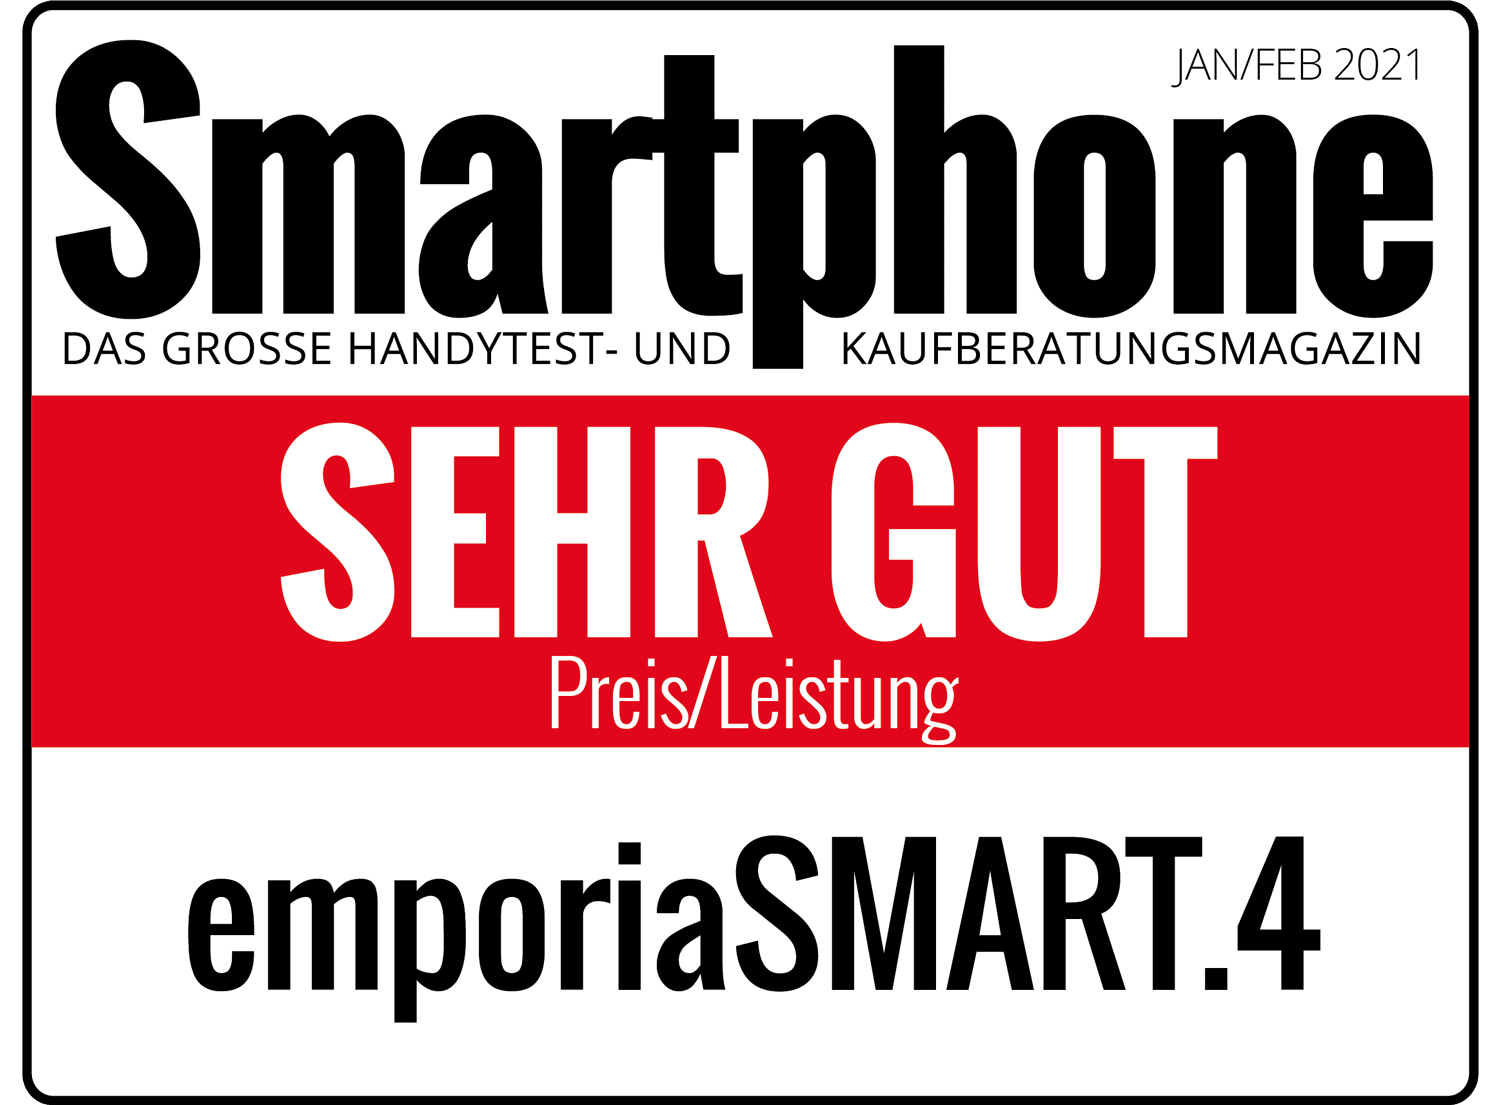 Smartphone-Label-Award_2326-1714-max-1